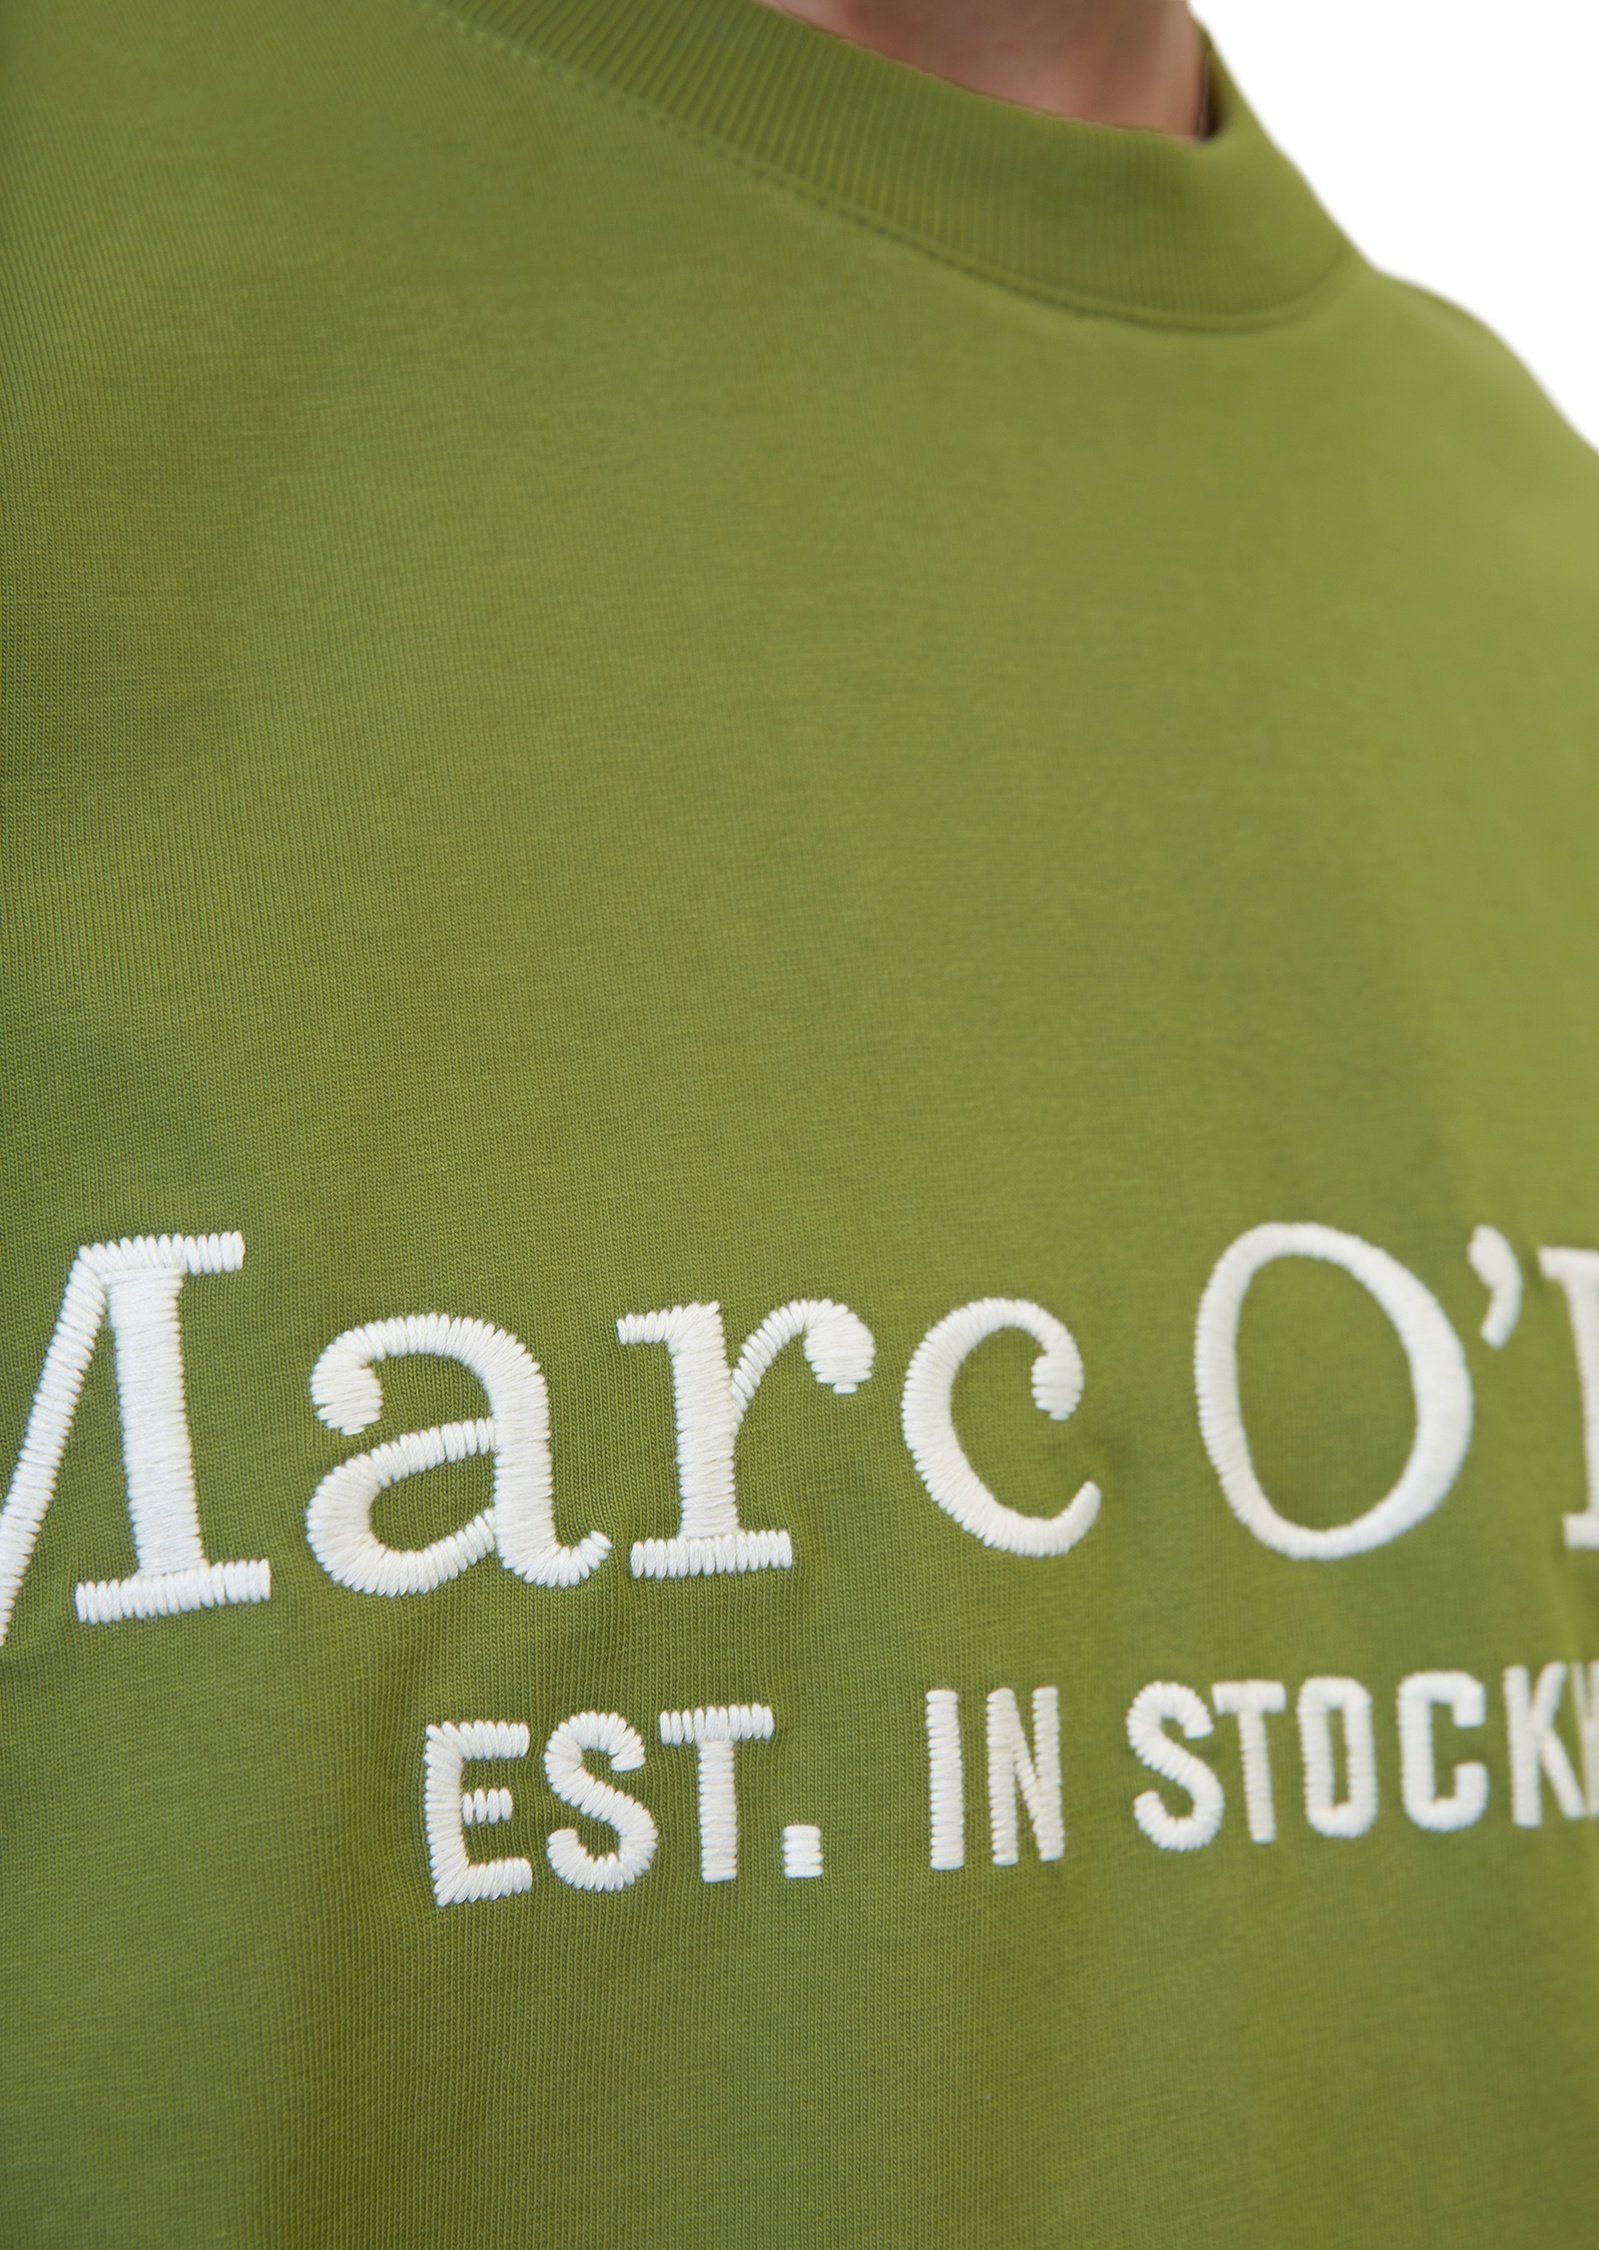 dunkelgrün hochwertiger aus T-Shirt Bio-Baumwolle O'Polo Marc